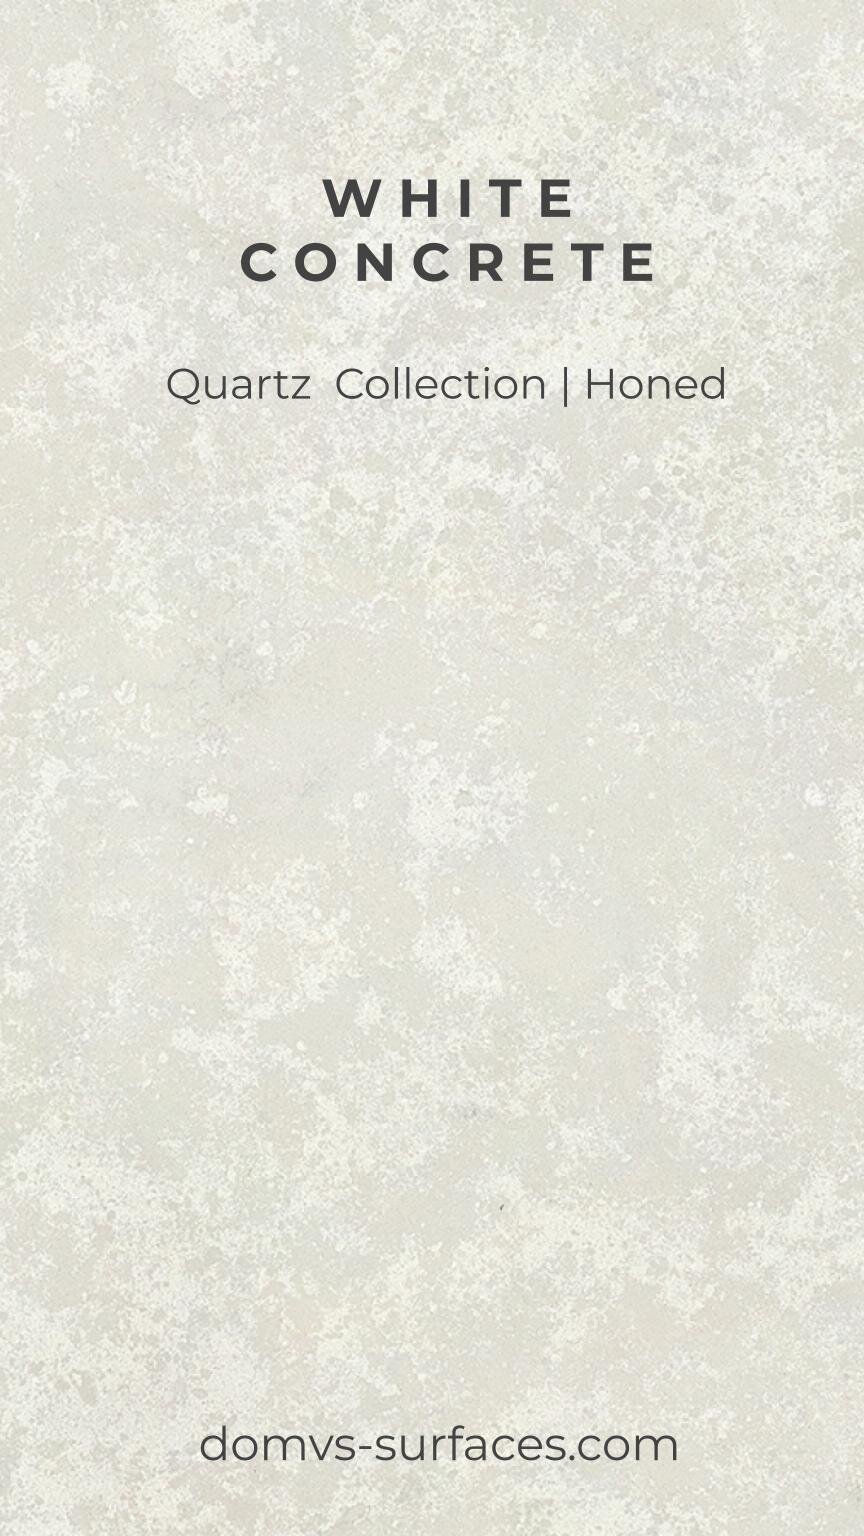 IGS Quartz White Concrete.jpg